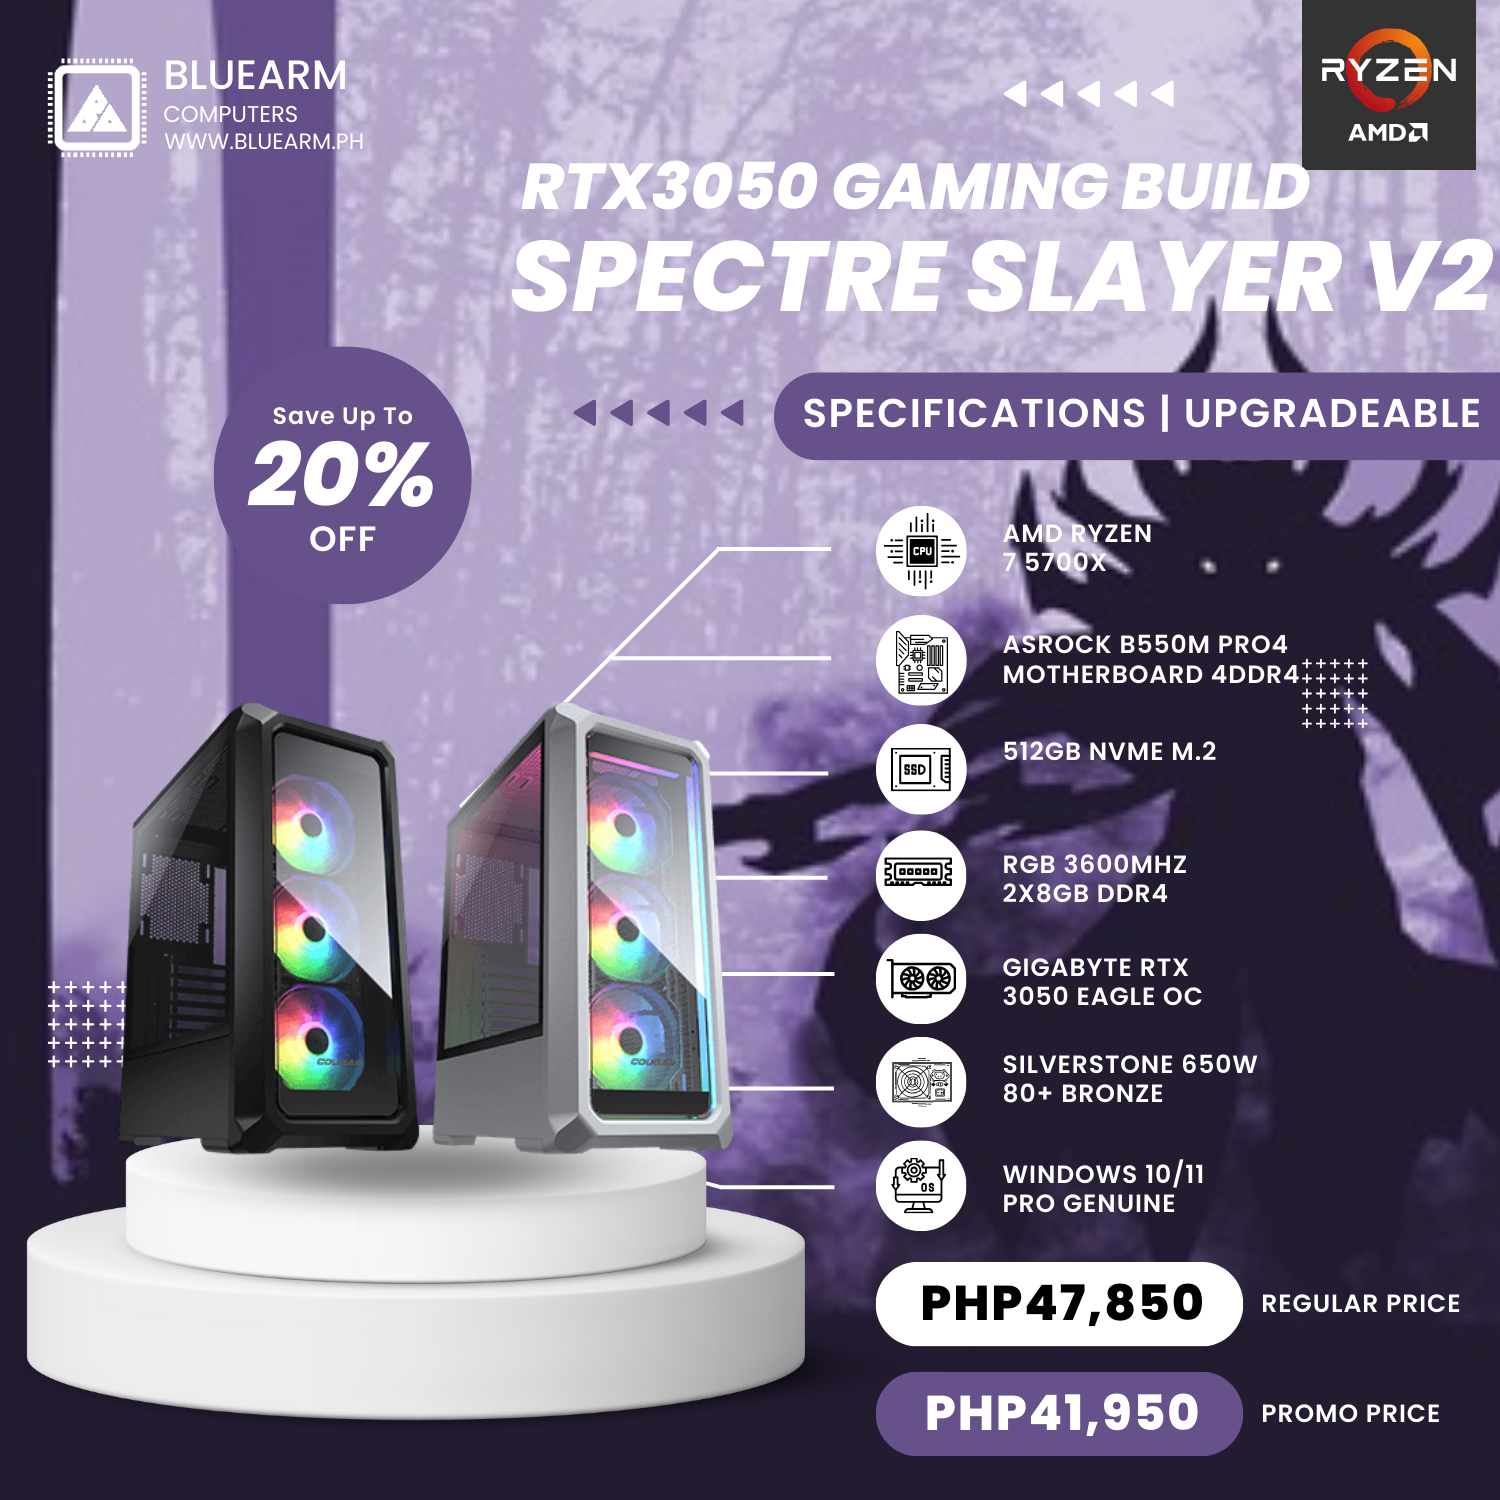 AMD RYZEN 7 5700X + SPECTRE SLAYER GAMING BUILD V2